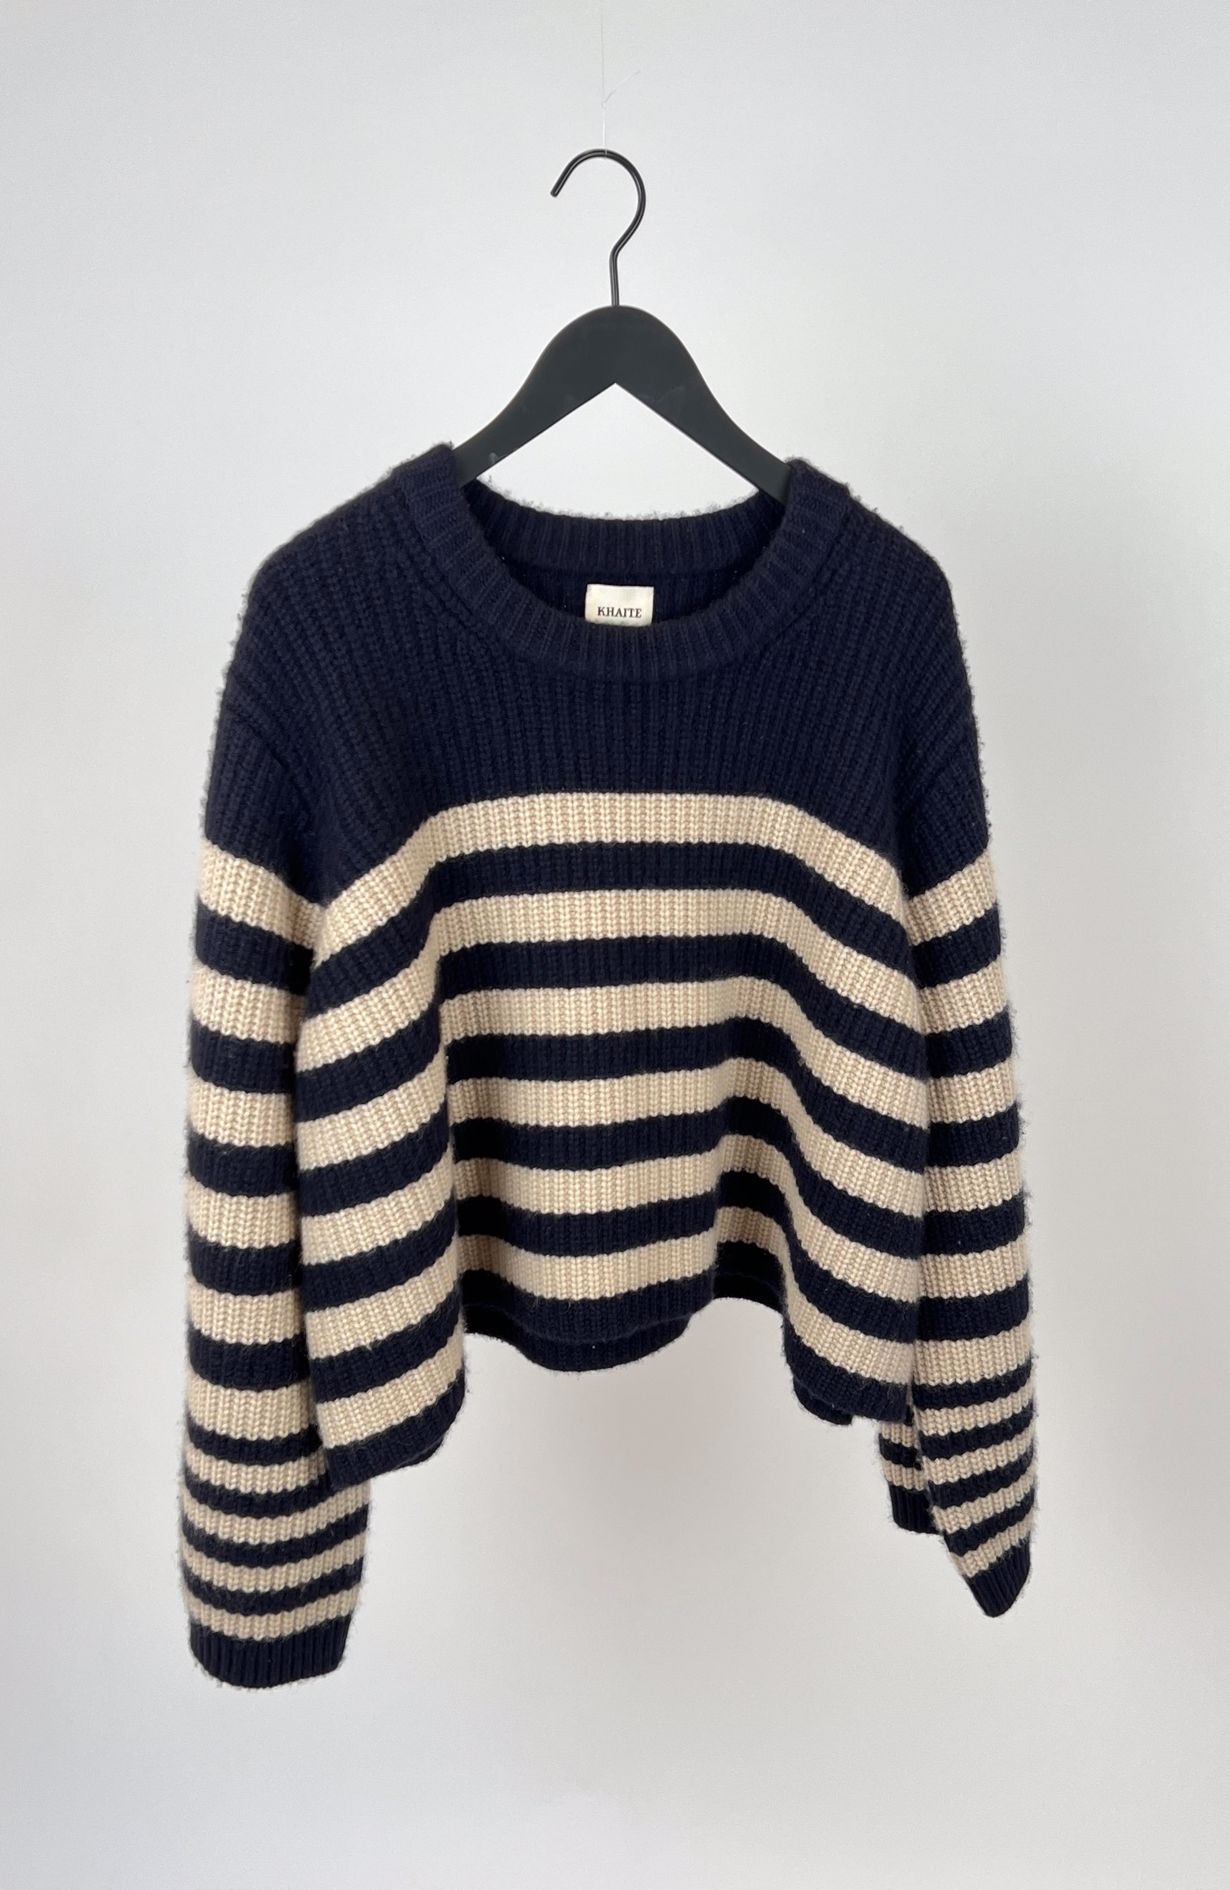 KHAITE knit striped size L